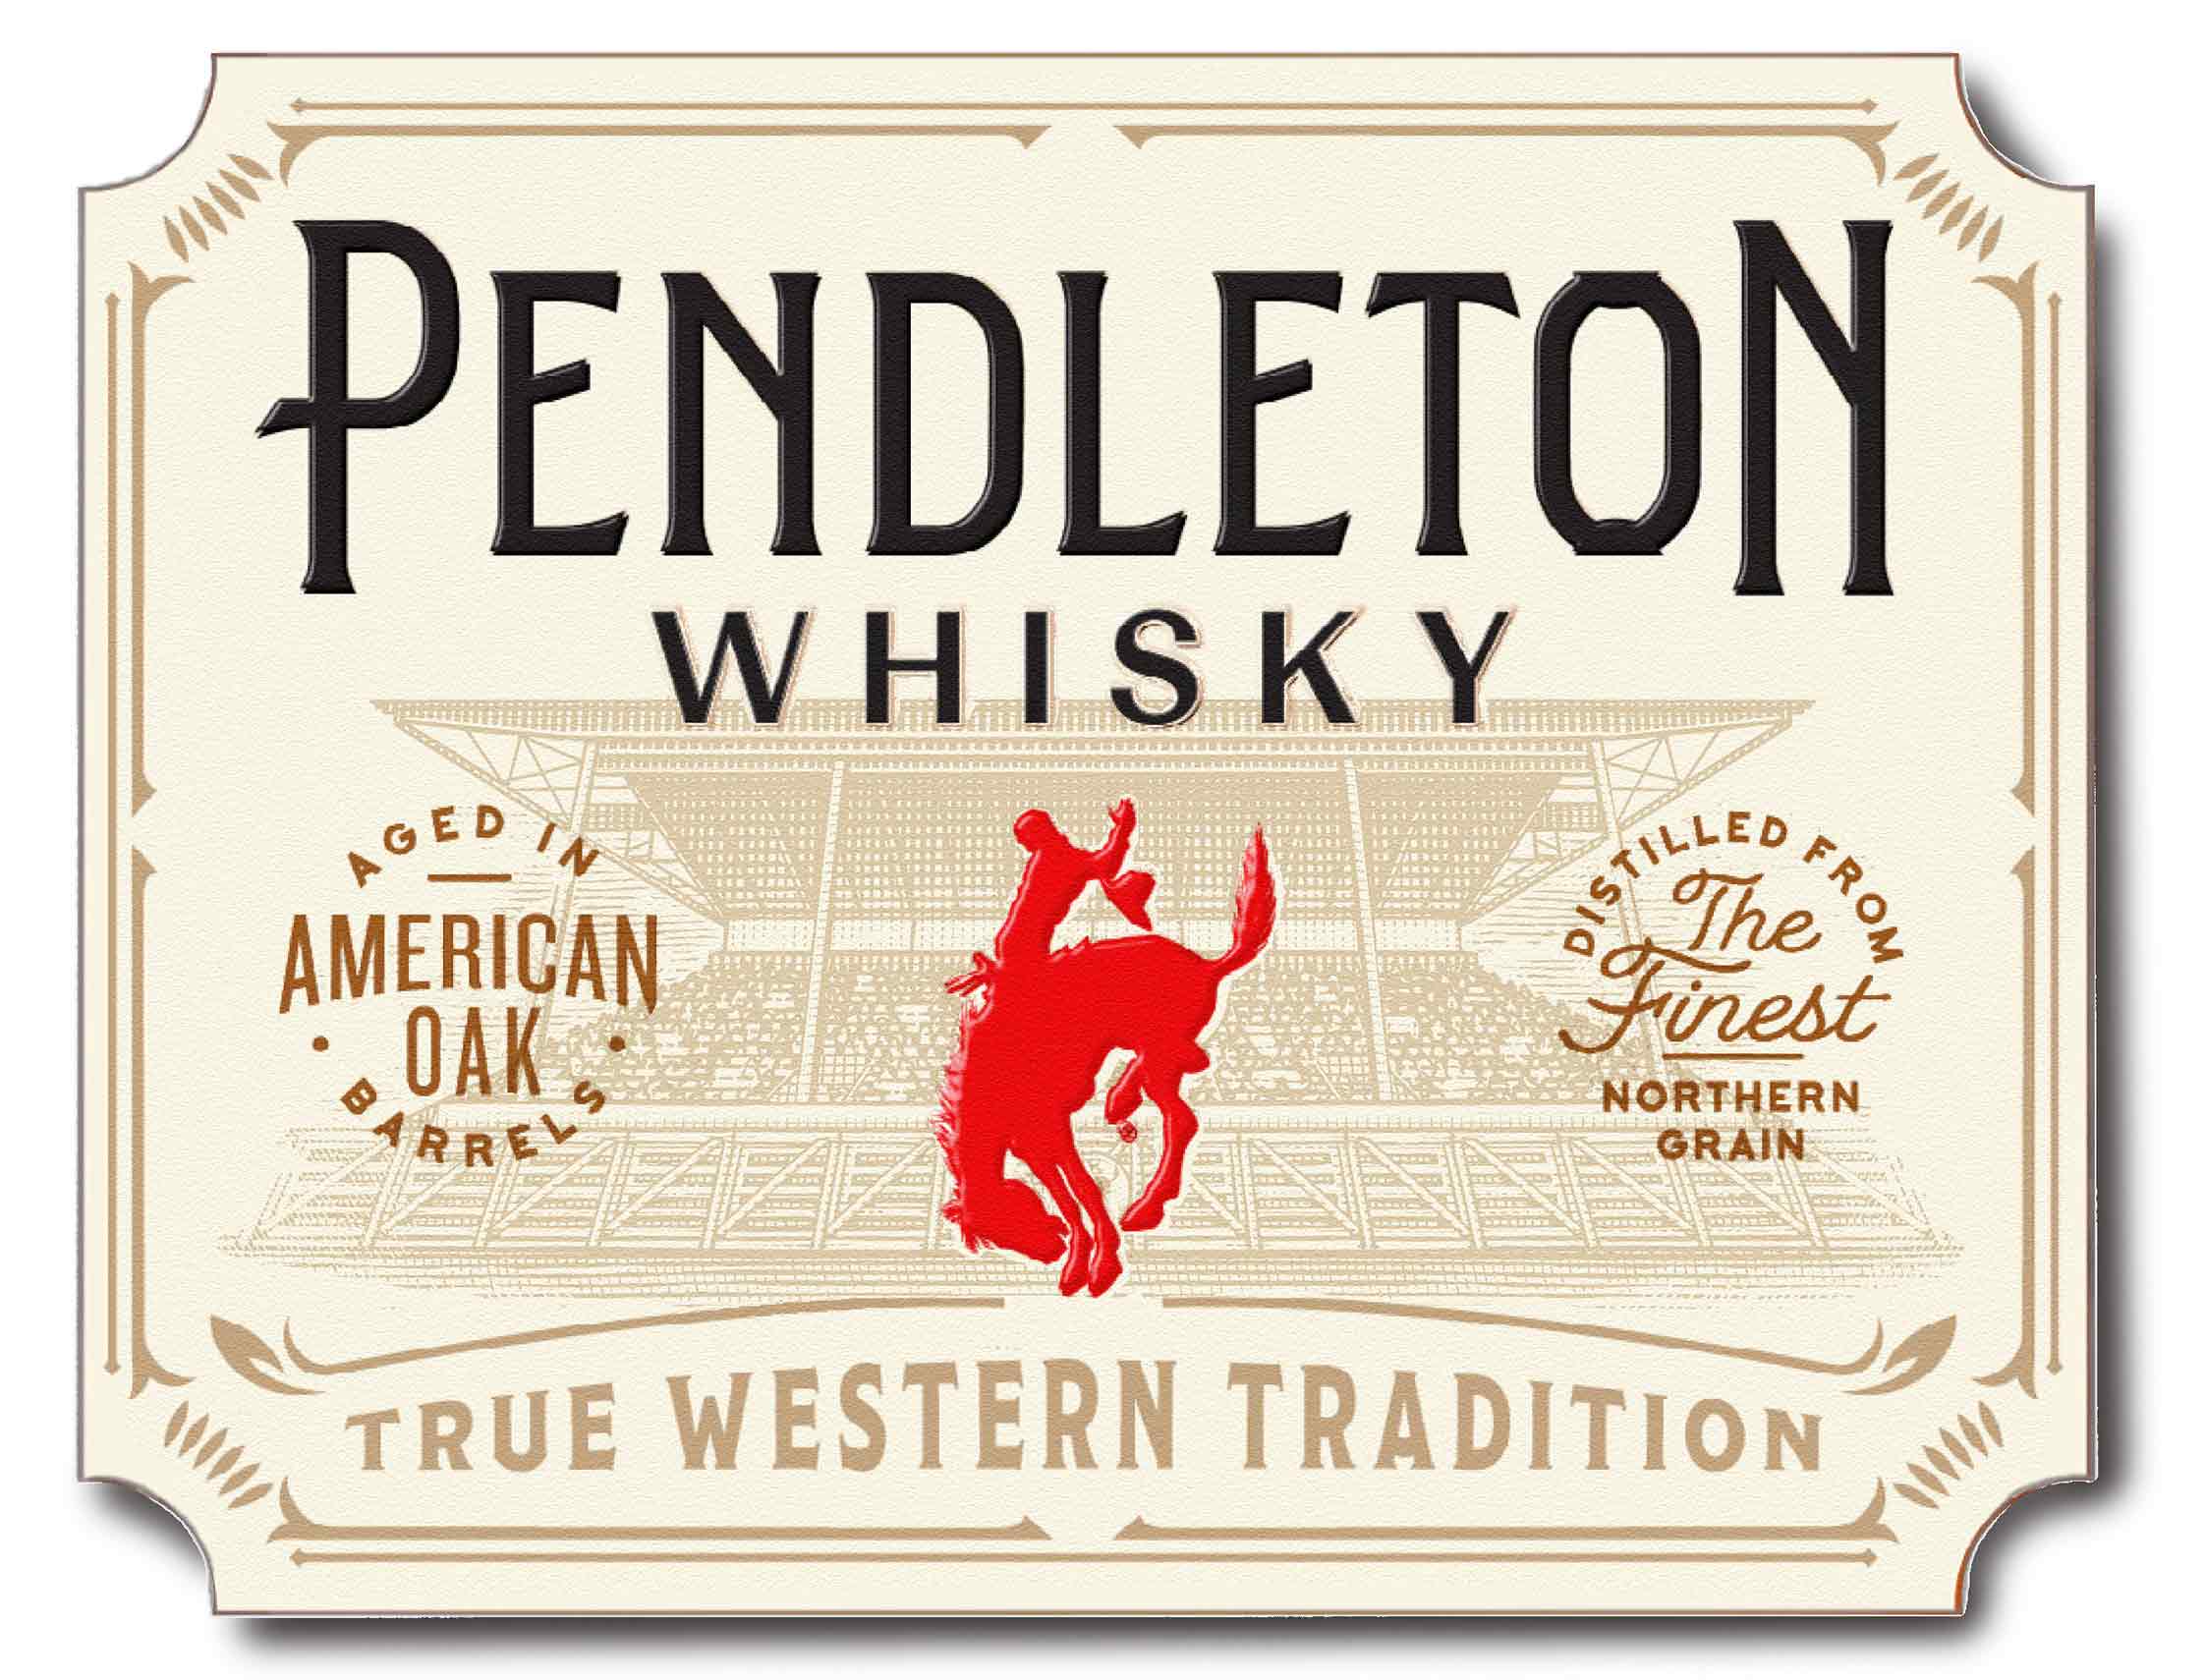 Pendleton Whisky Label Rendered by Steven Noble